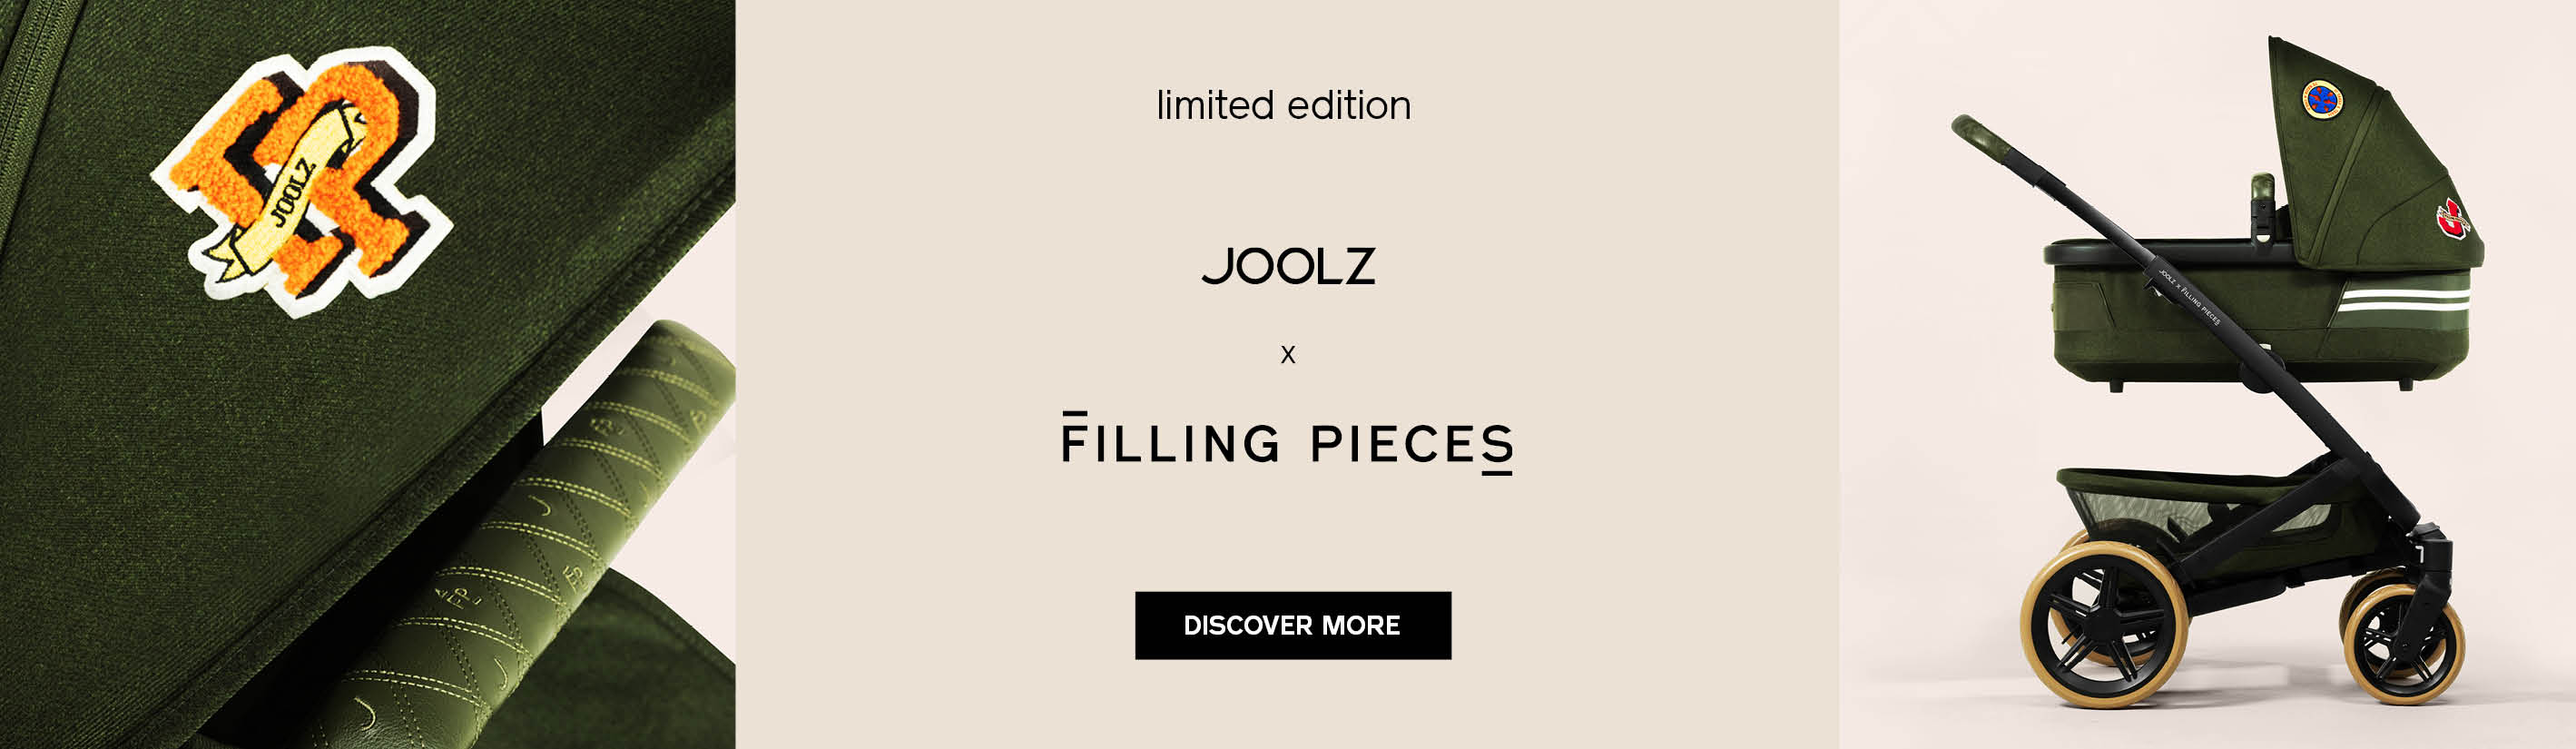 Joolz x Filling Pieces 